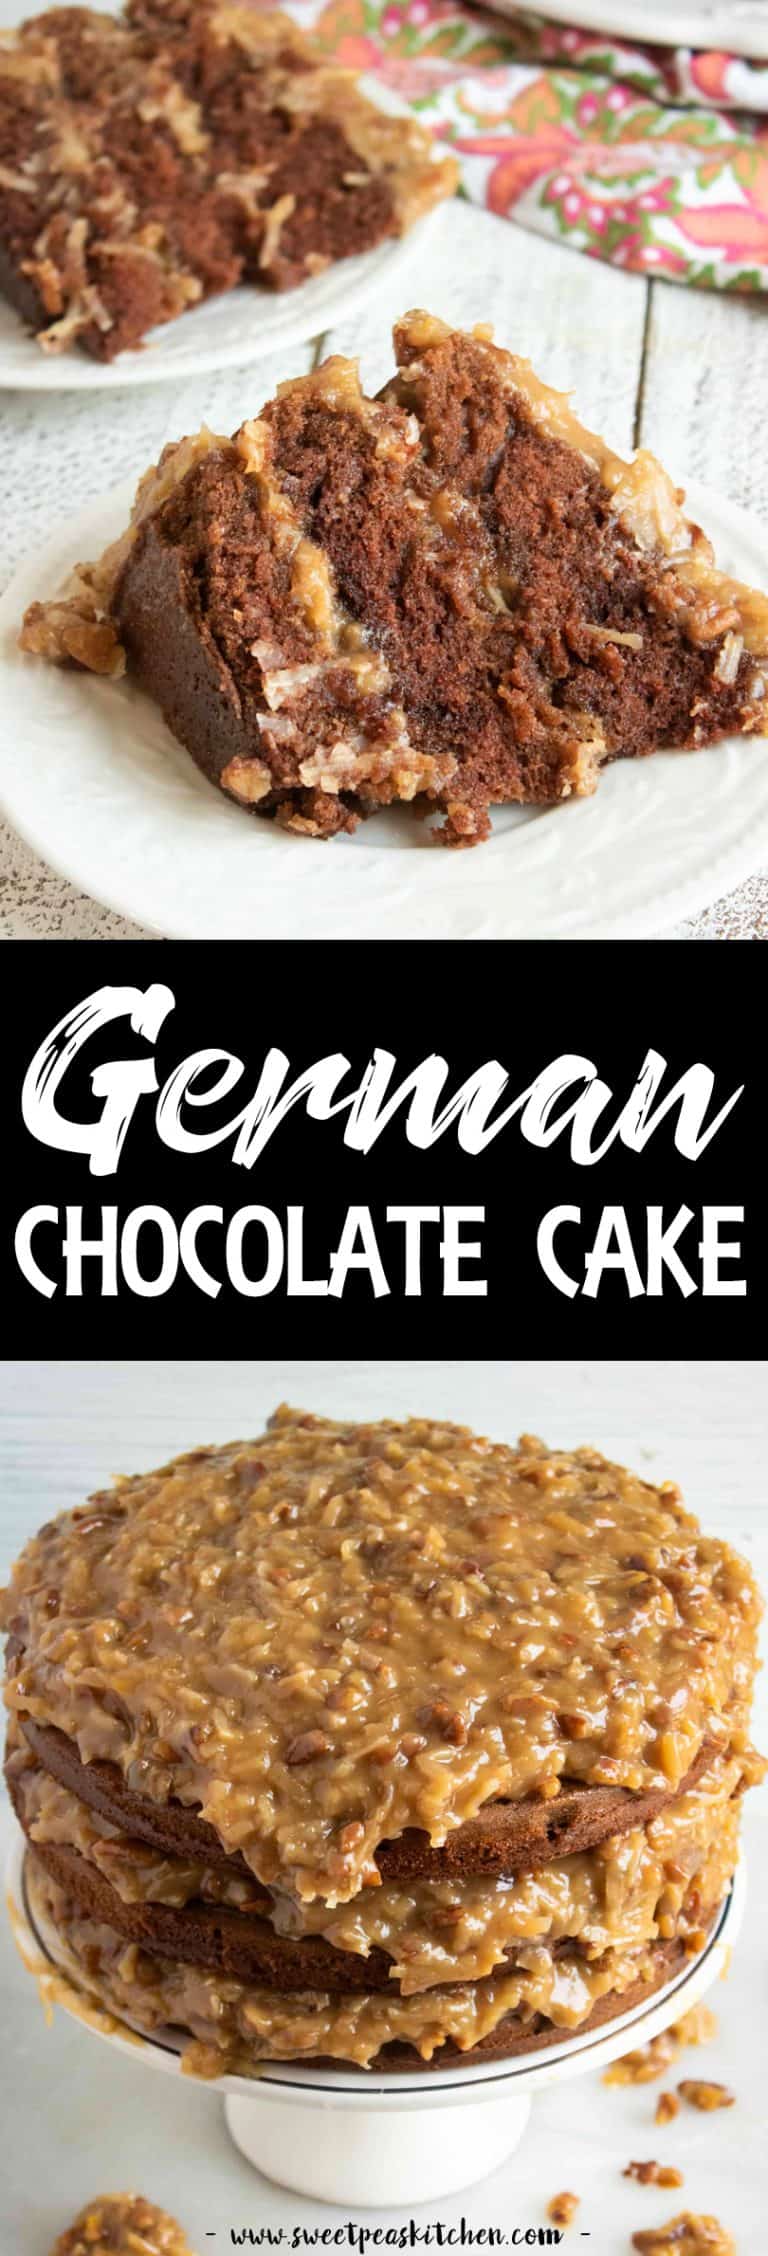 German Chocolate Layer Cake |Sweet Pea's Kitchen